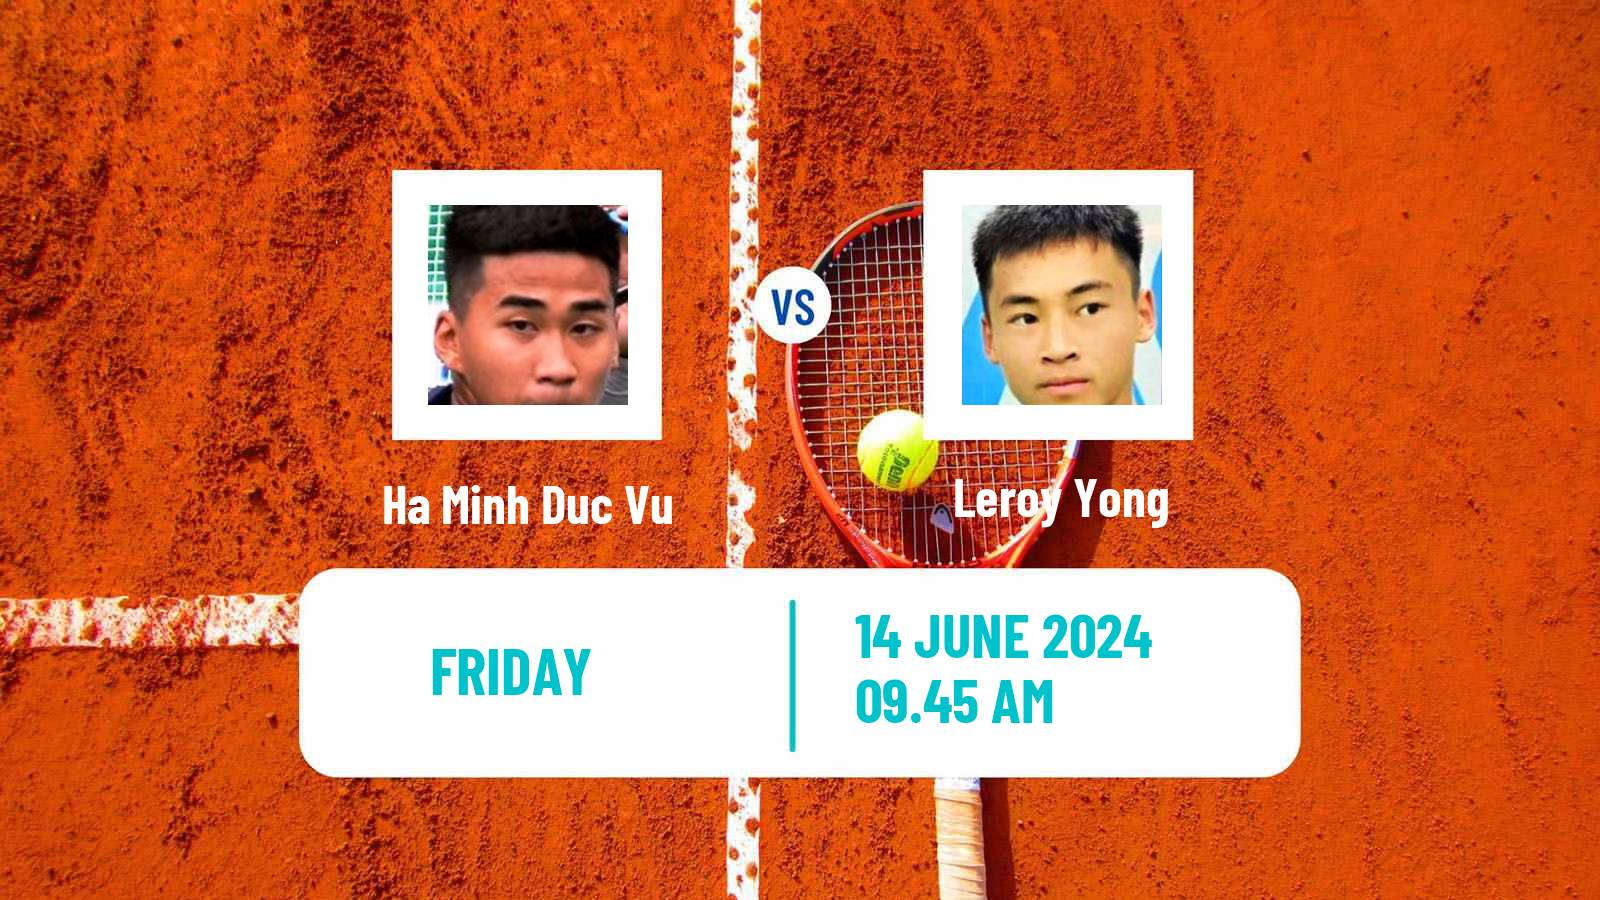 Tennis Davis Cup Group III Ha Minh Duc Vu - Leroy Yong